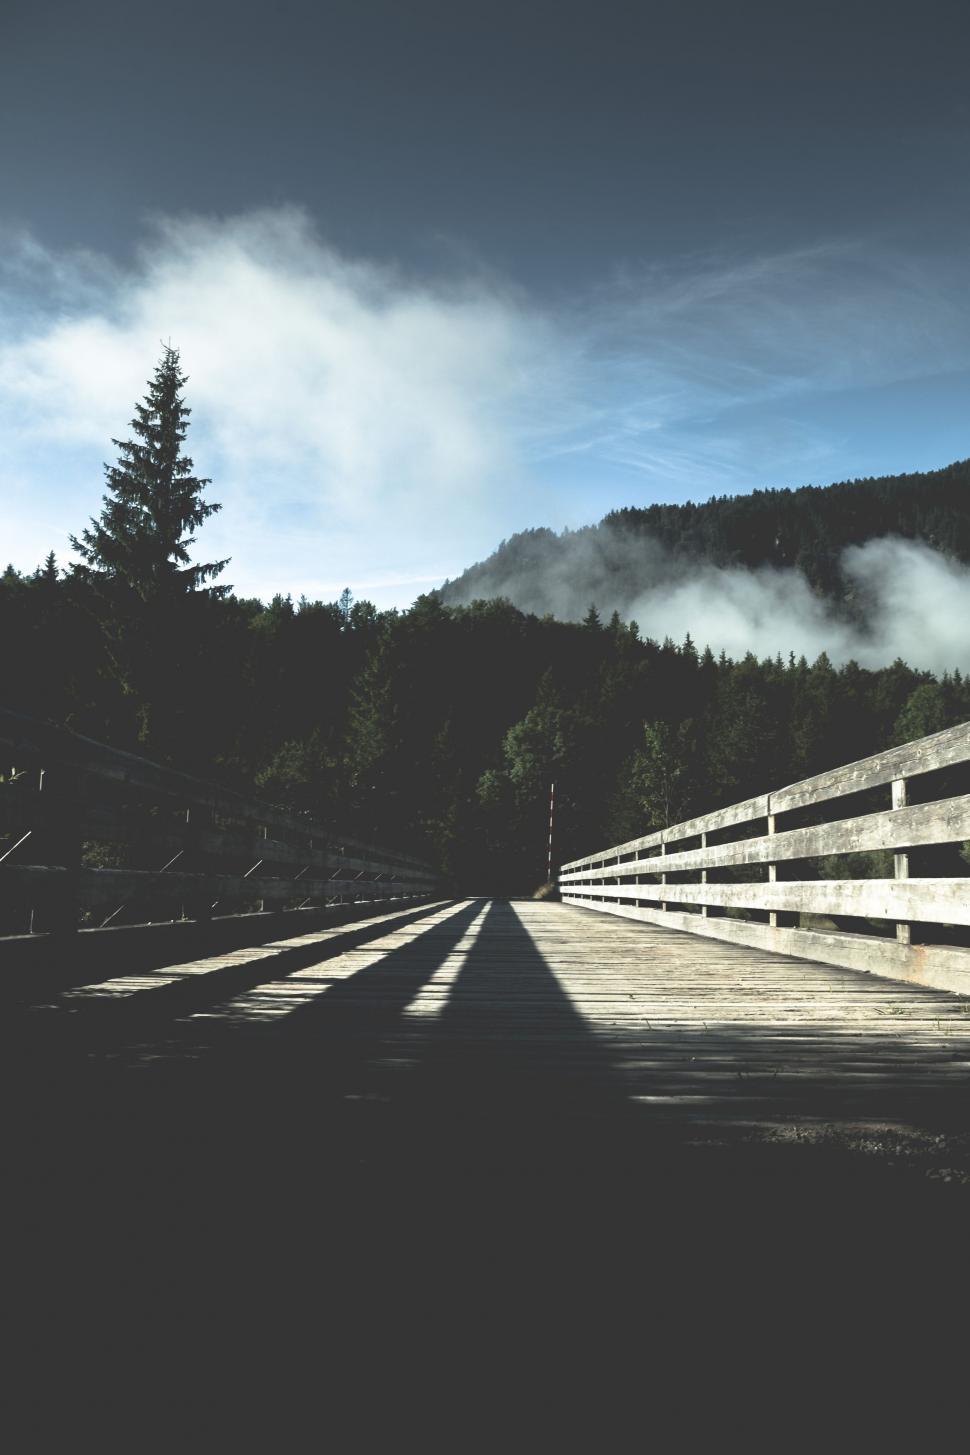 Free Image of Bridge Over Mountain 